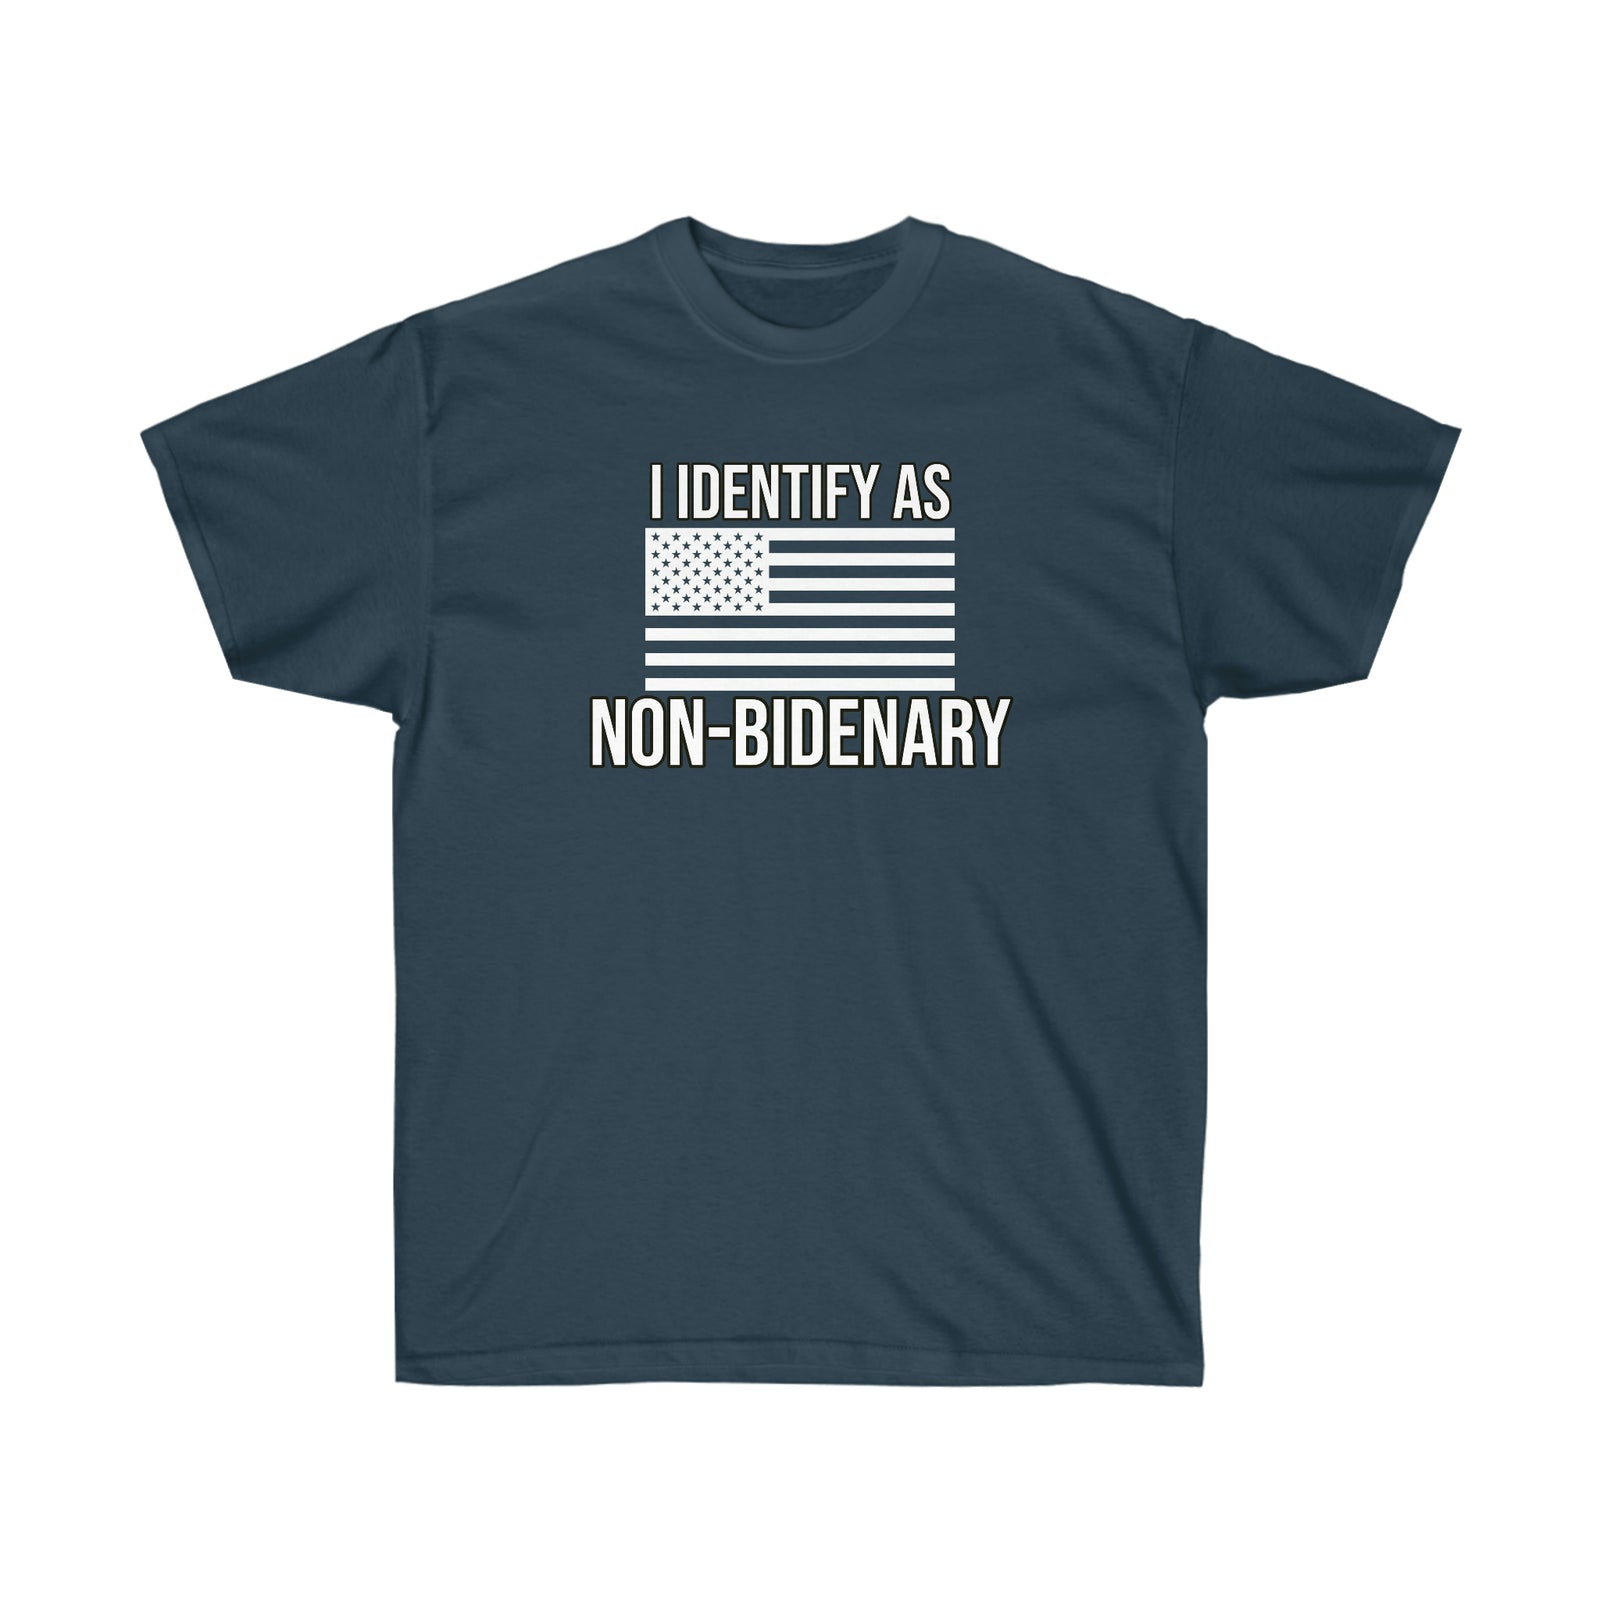 I Identify as Non-Bidenary Tee Shirt